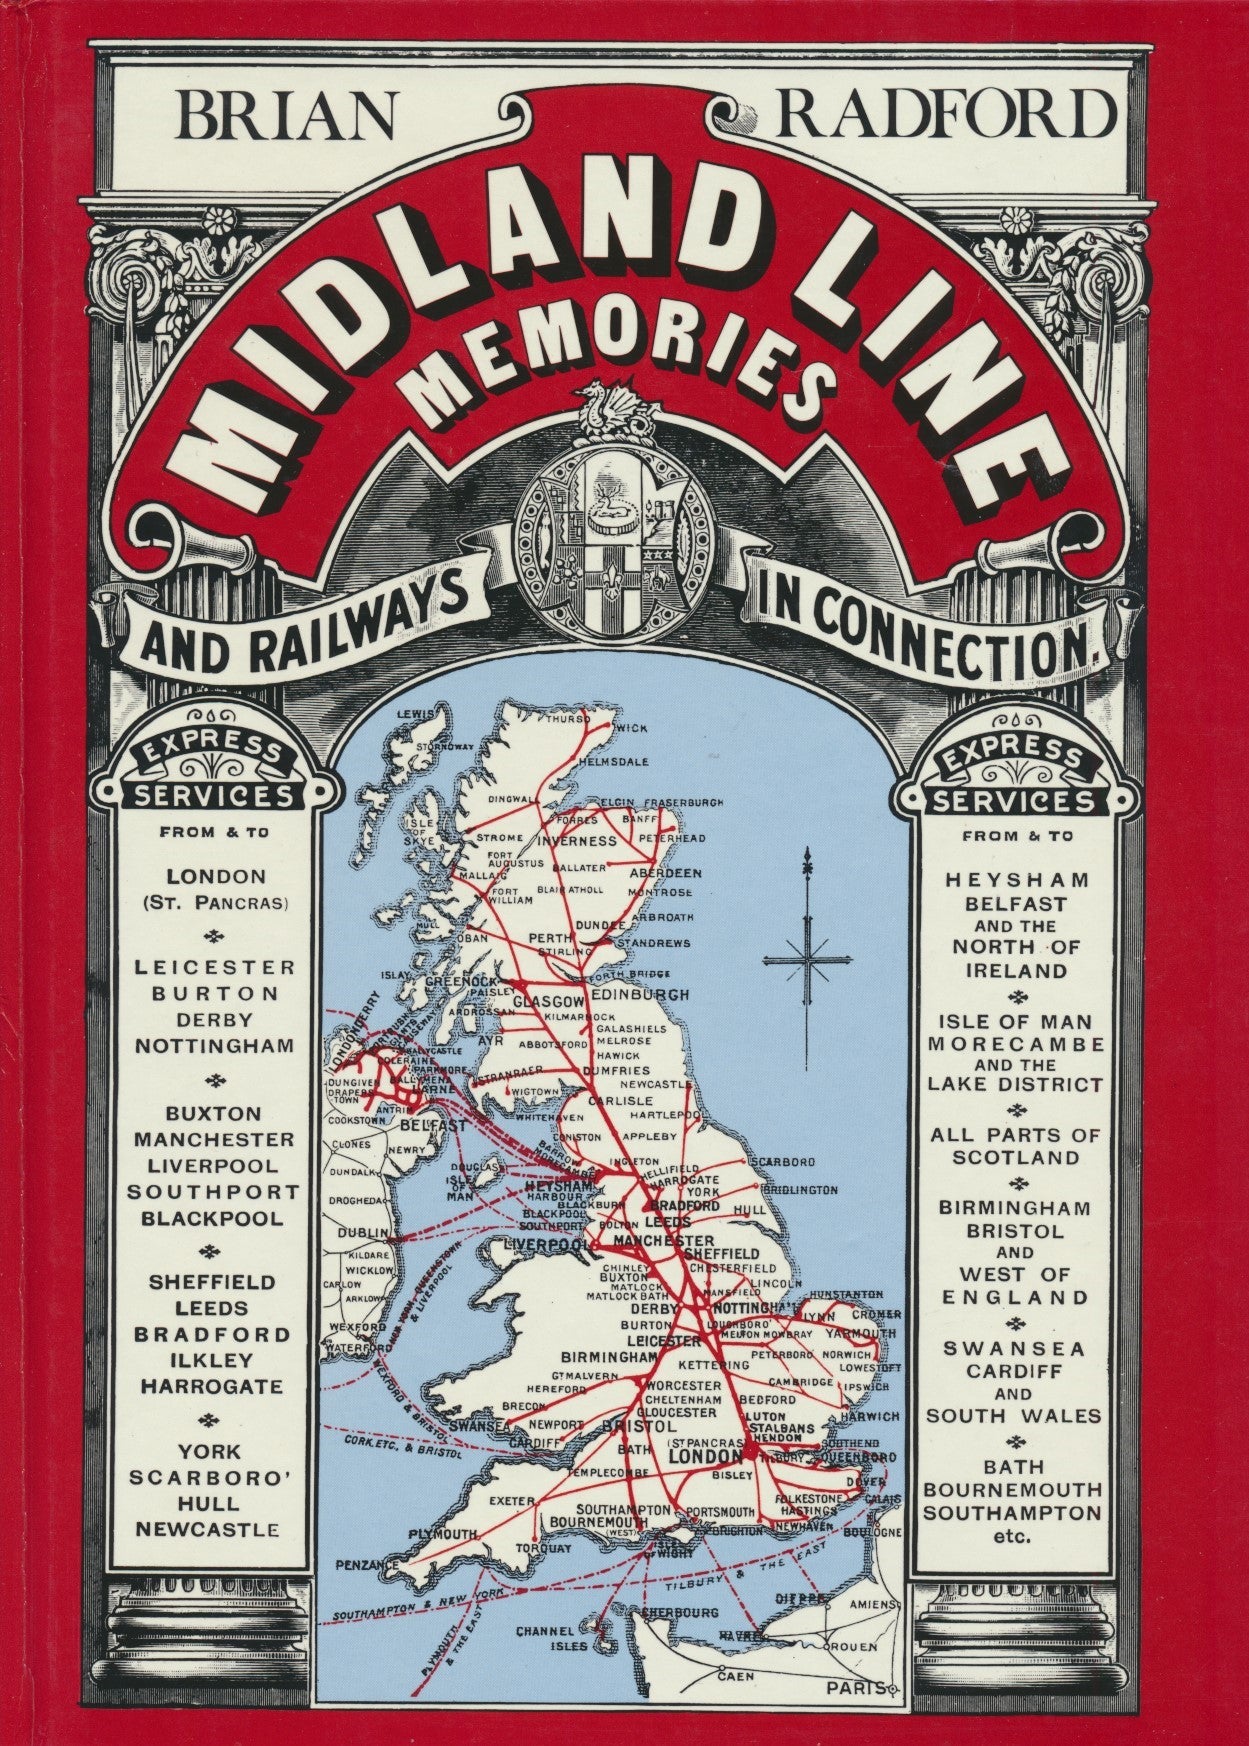 Midland Line Memories